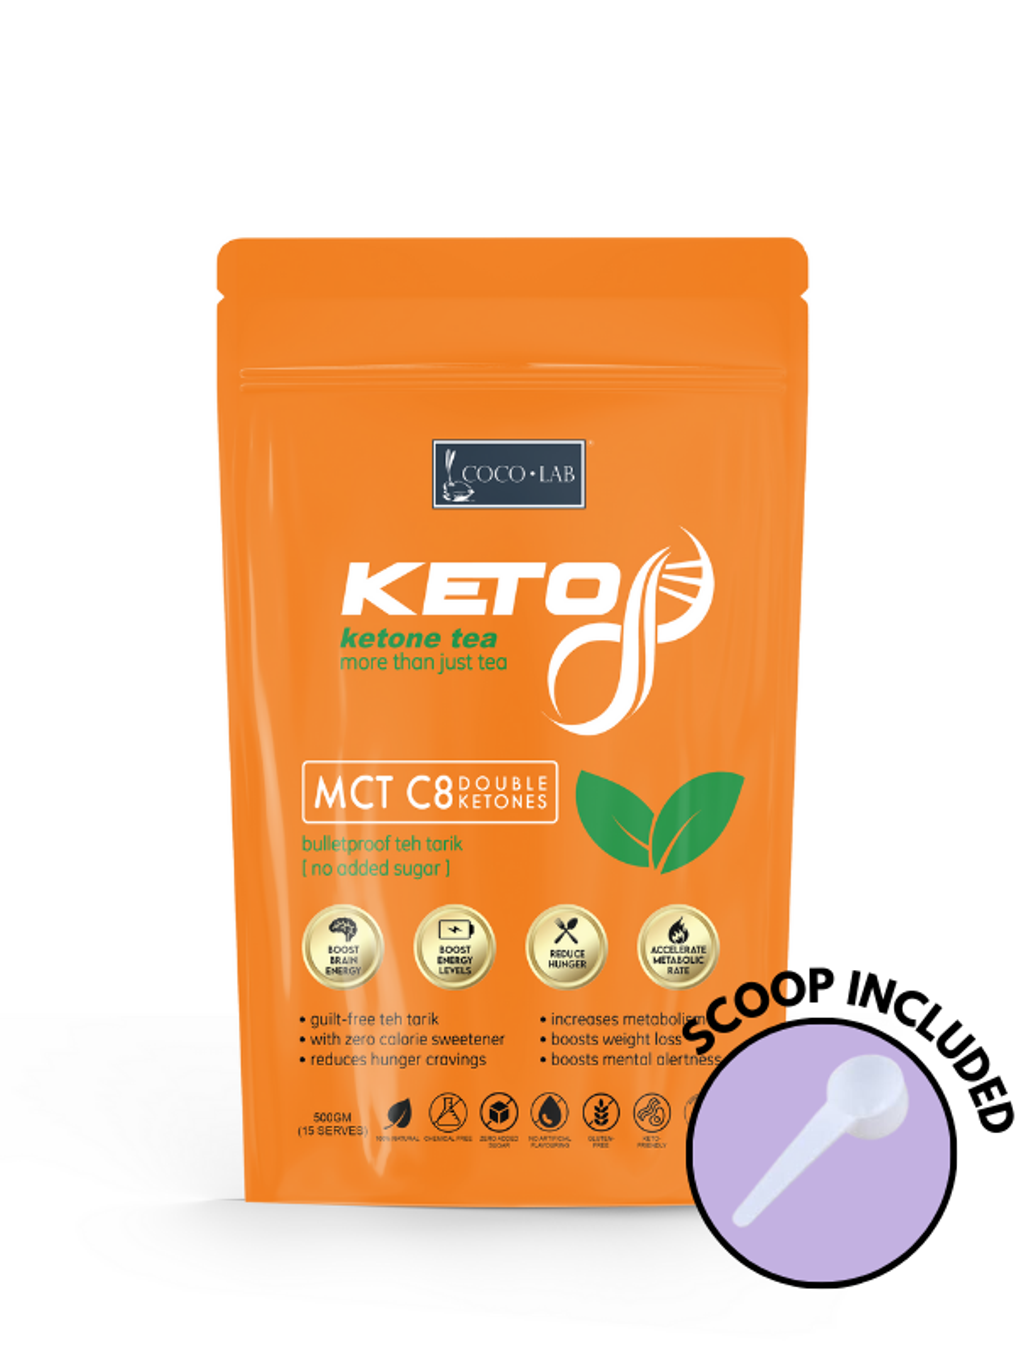 _Keto8 tea (Scoop Included) (1)